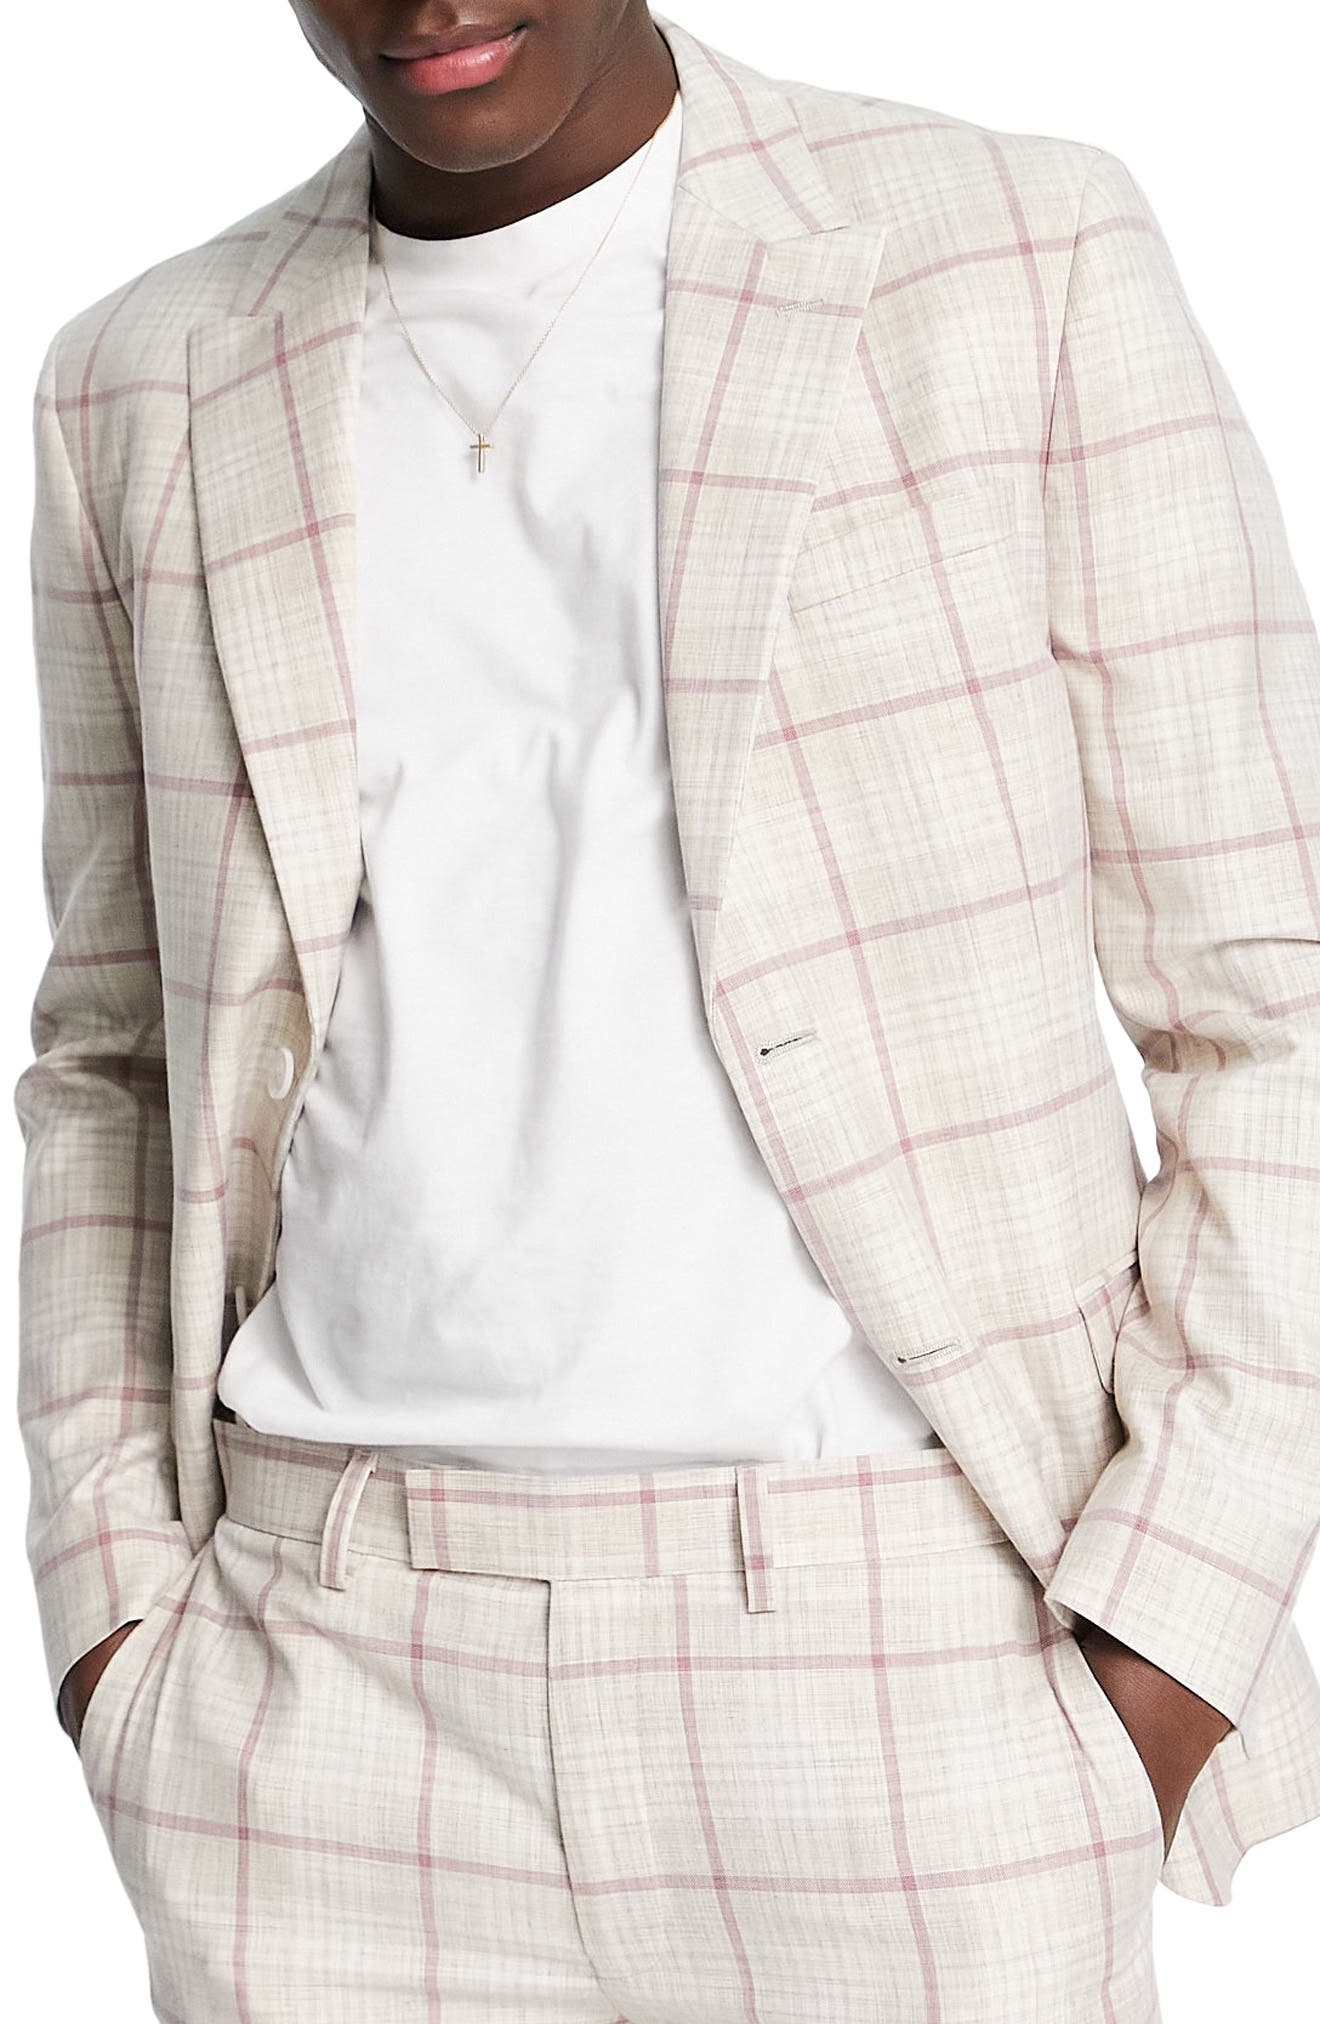 Masters Sports Jacket white-light pink check pattern athletic style Fashion Jackets Sports Jackets 